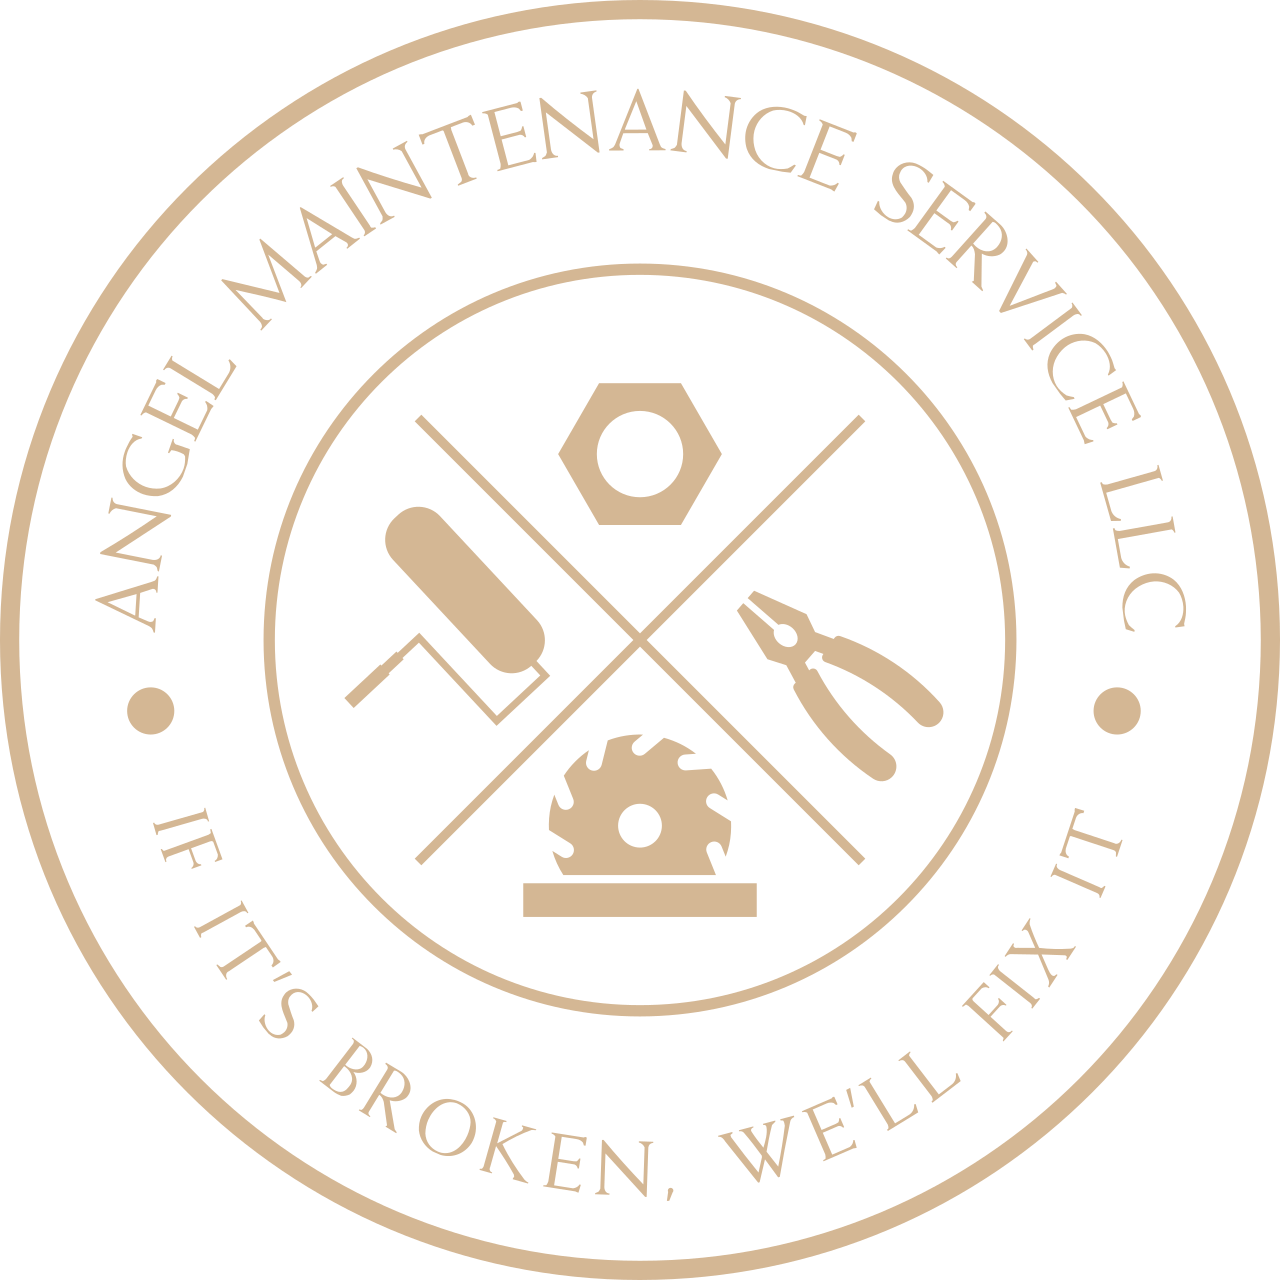 ANGEL MAINTENANCE SERVICE LLC's logo